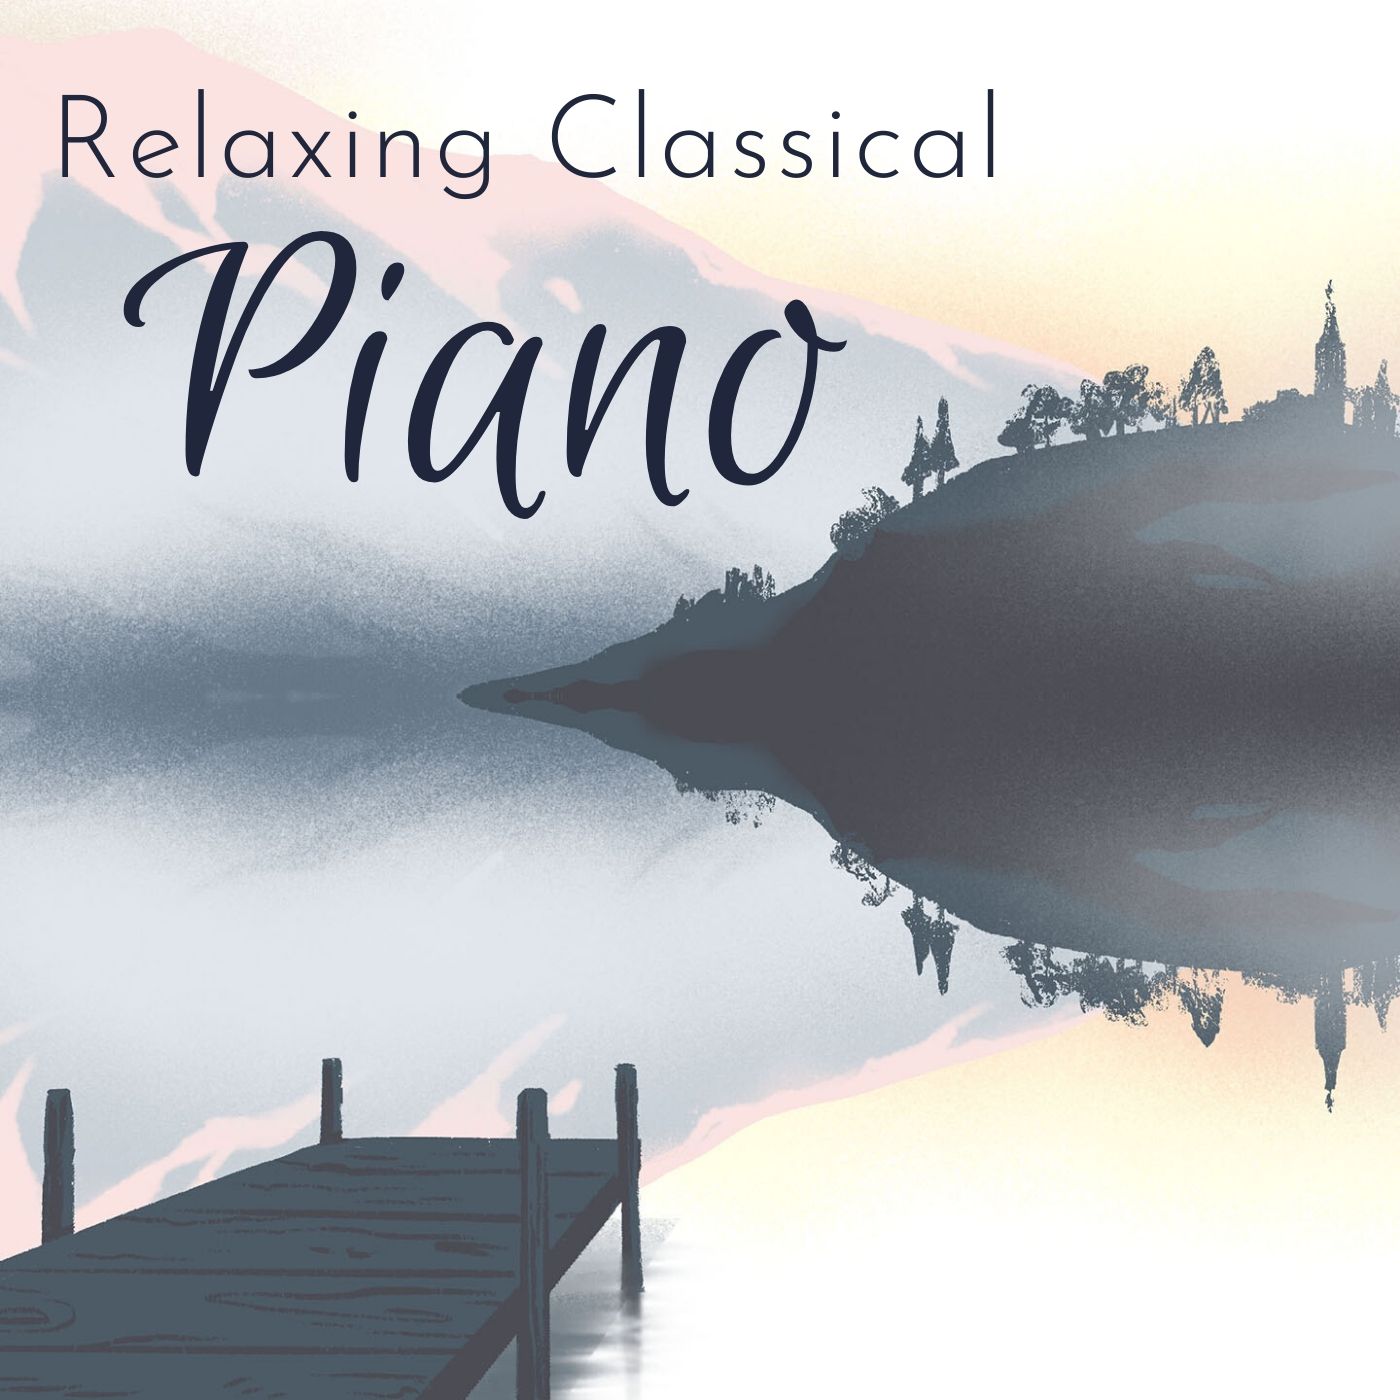 Peaceful, Relaxing Classical Piano